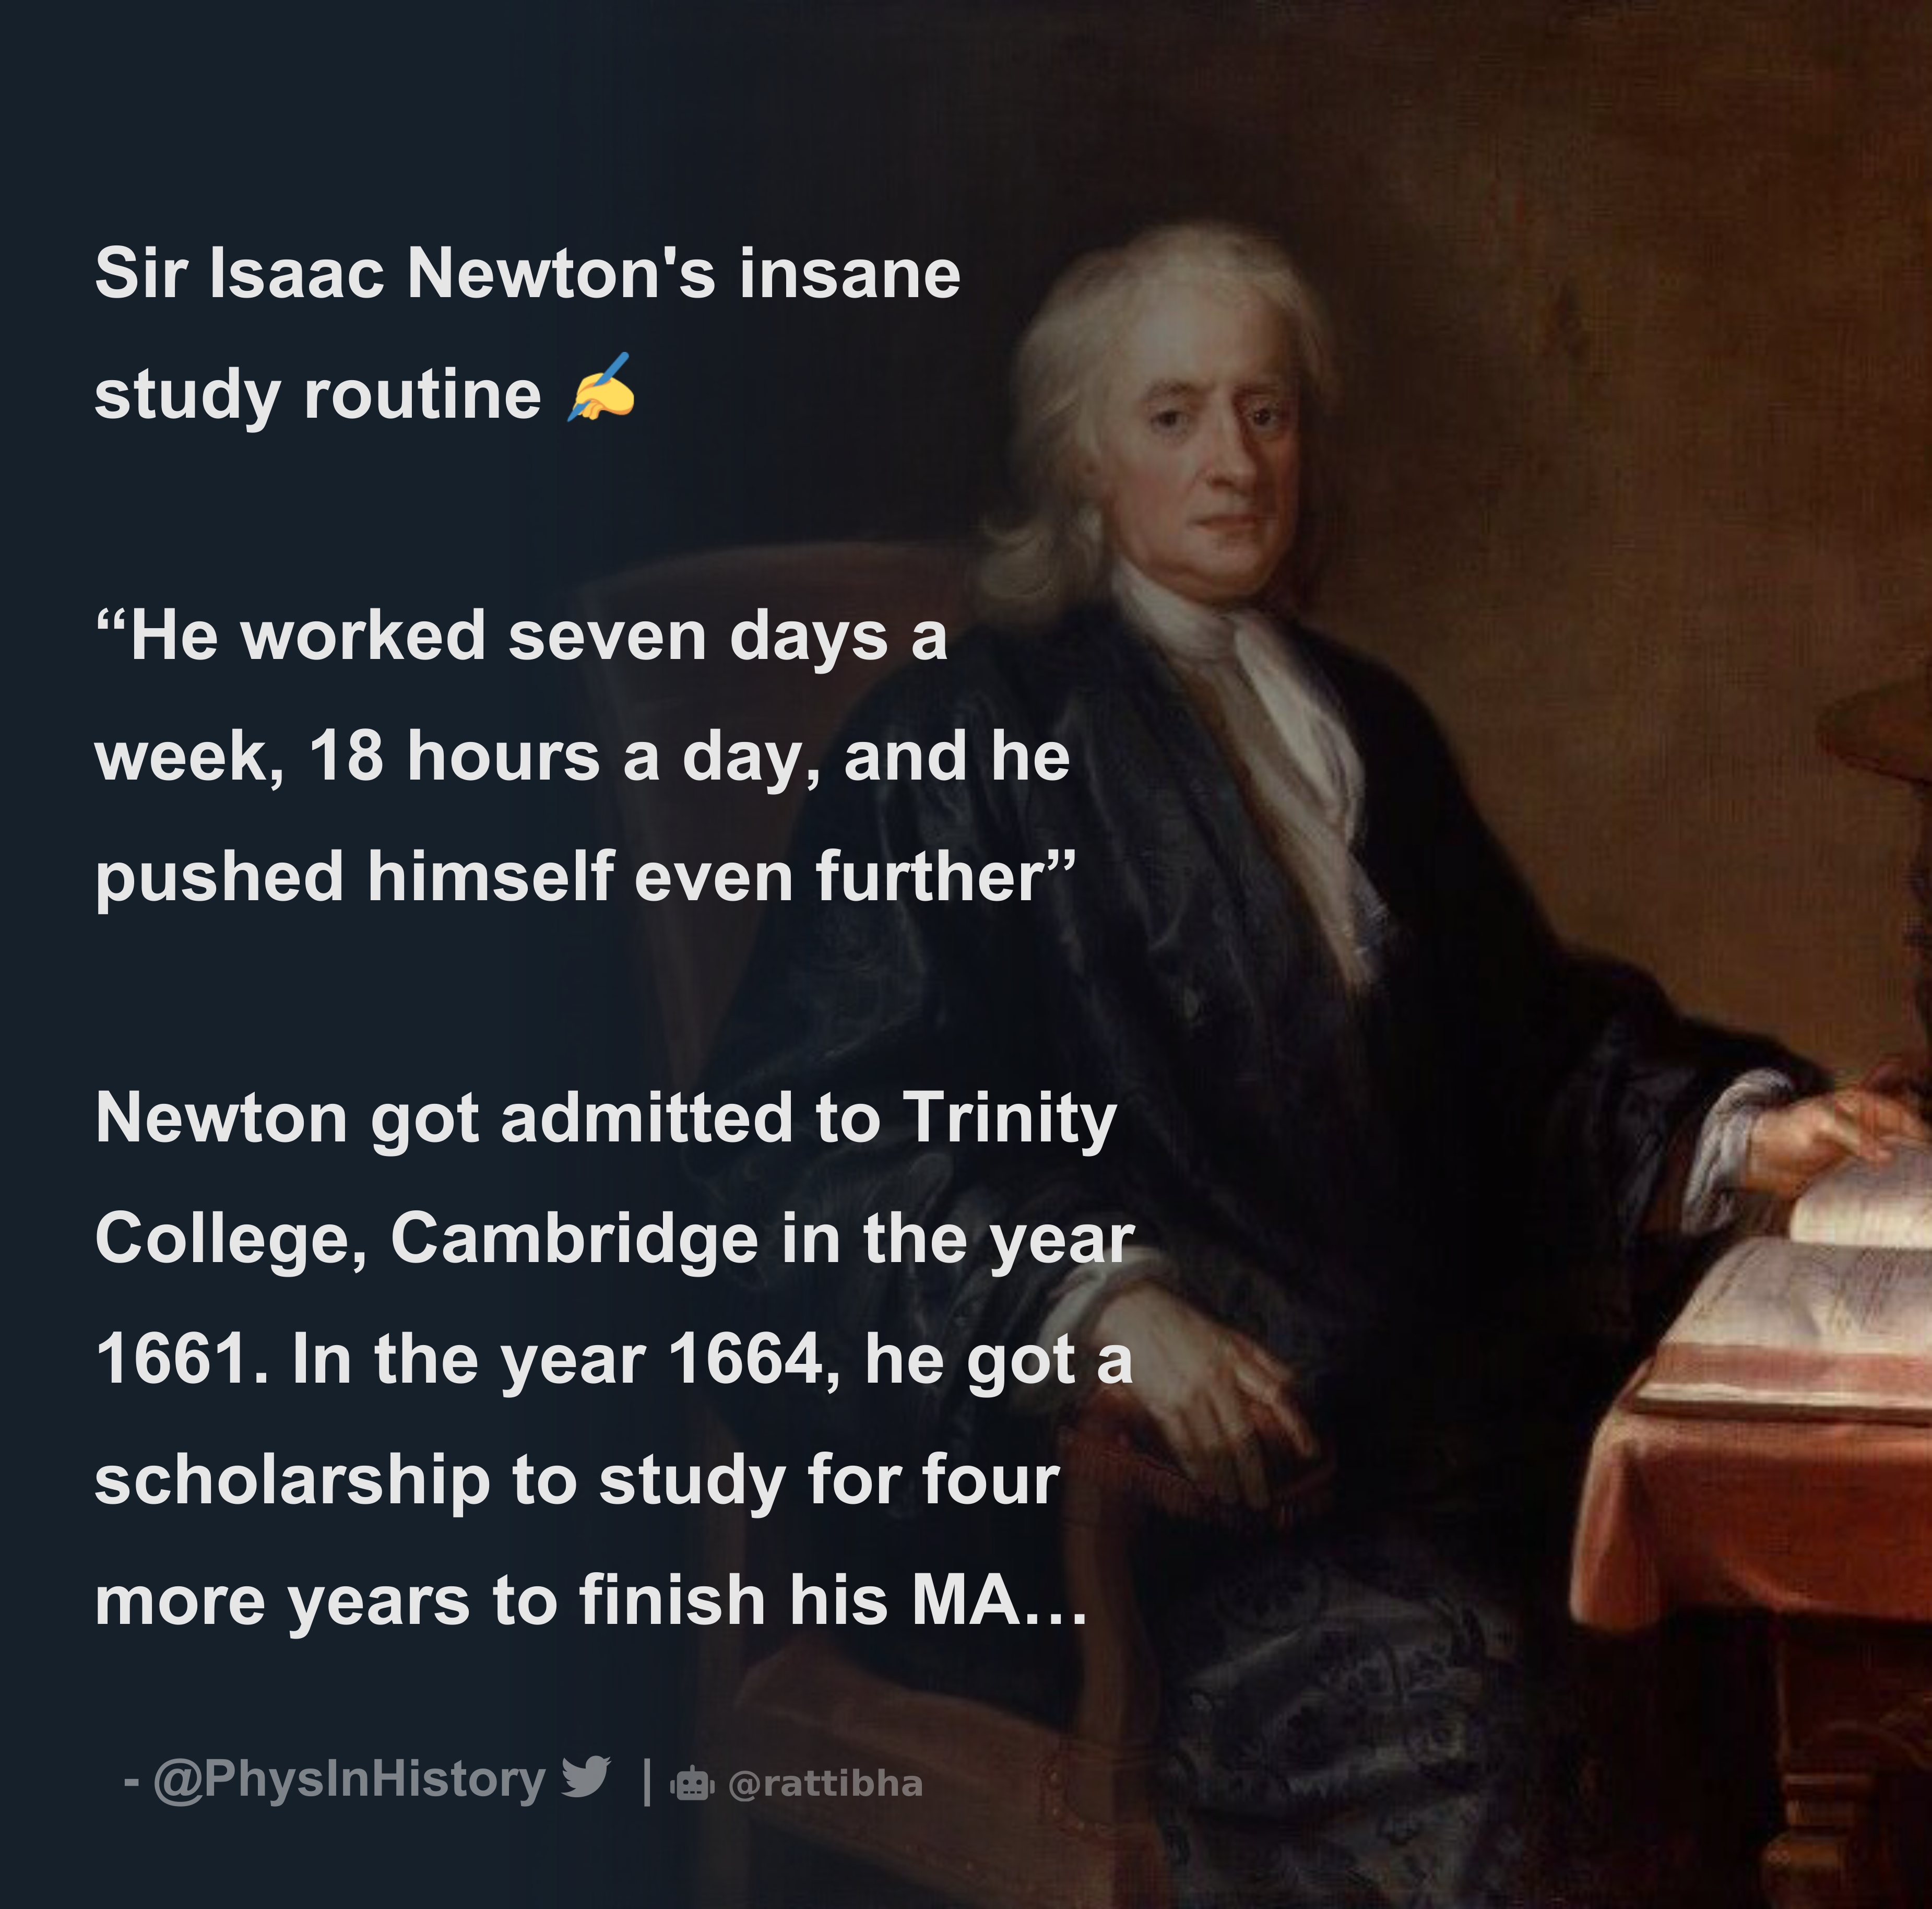 The Insane Study Routine of Sir Isaac Newton